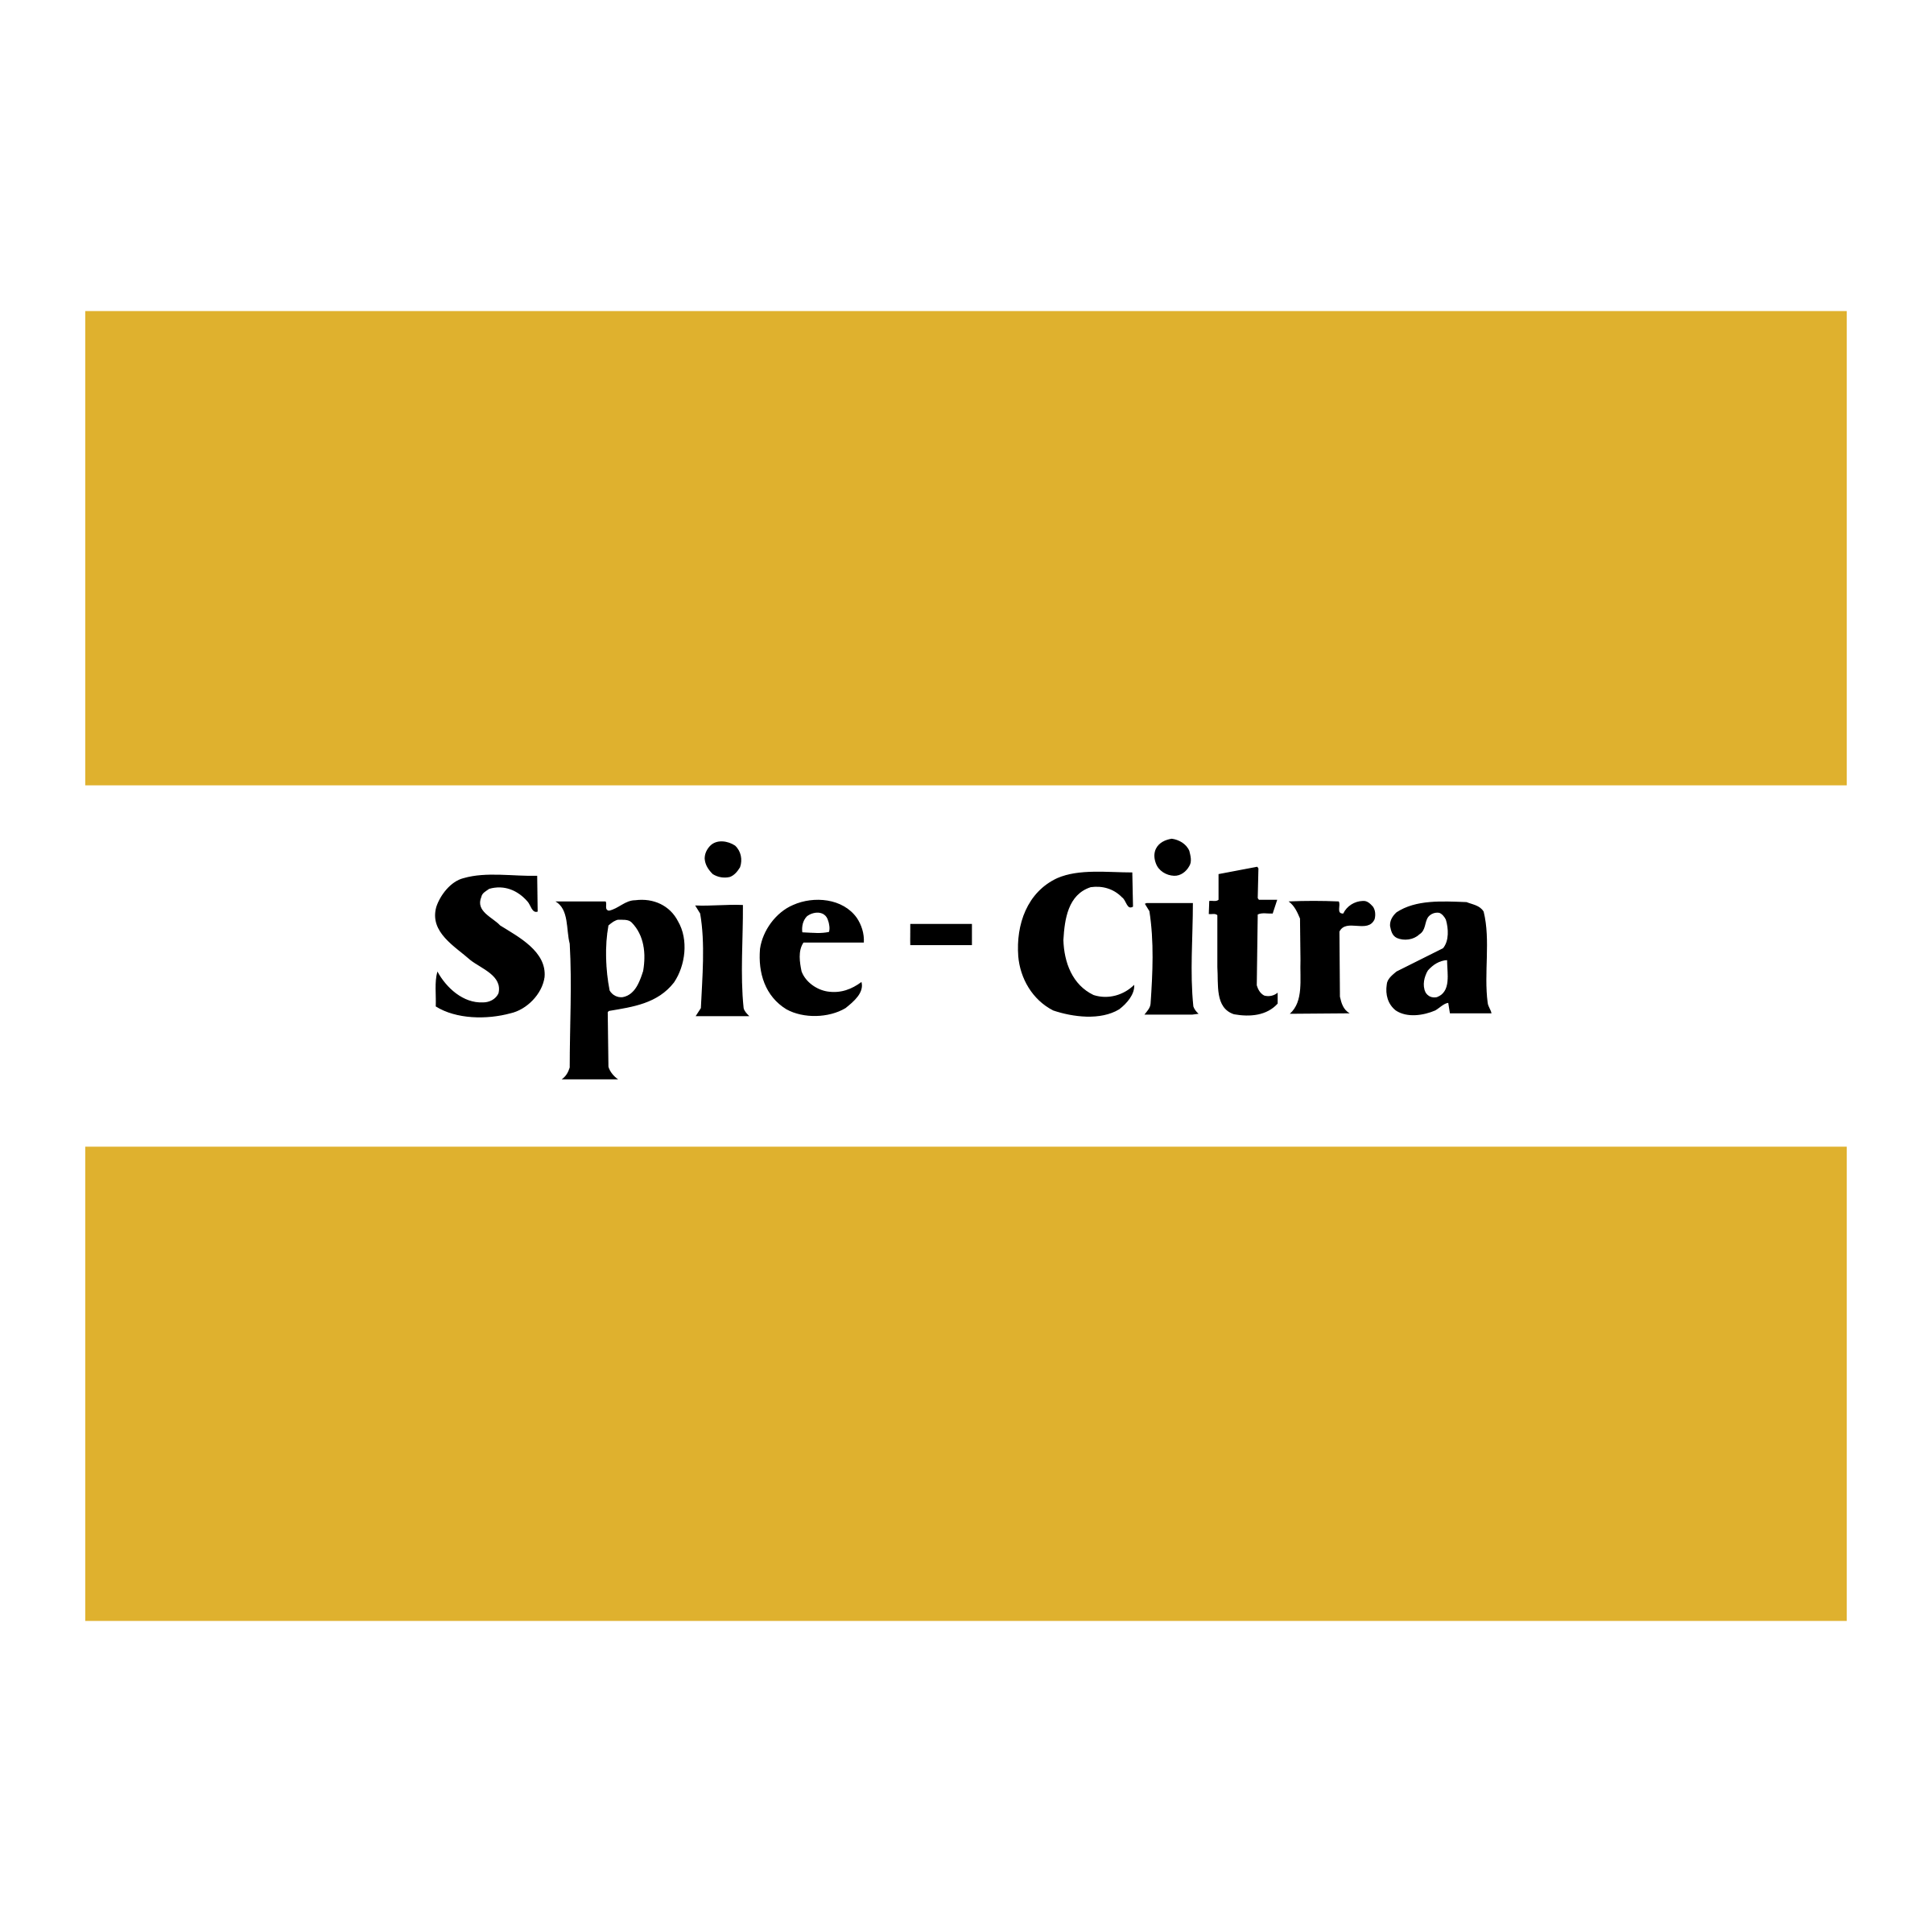 Citra Logo - Spie Citra Logo PNG Transparent & SVG Vector - Freebie Supply